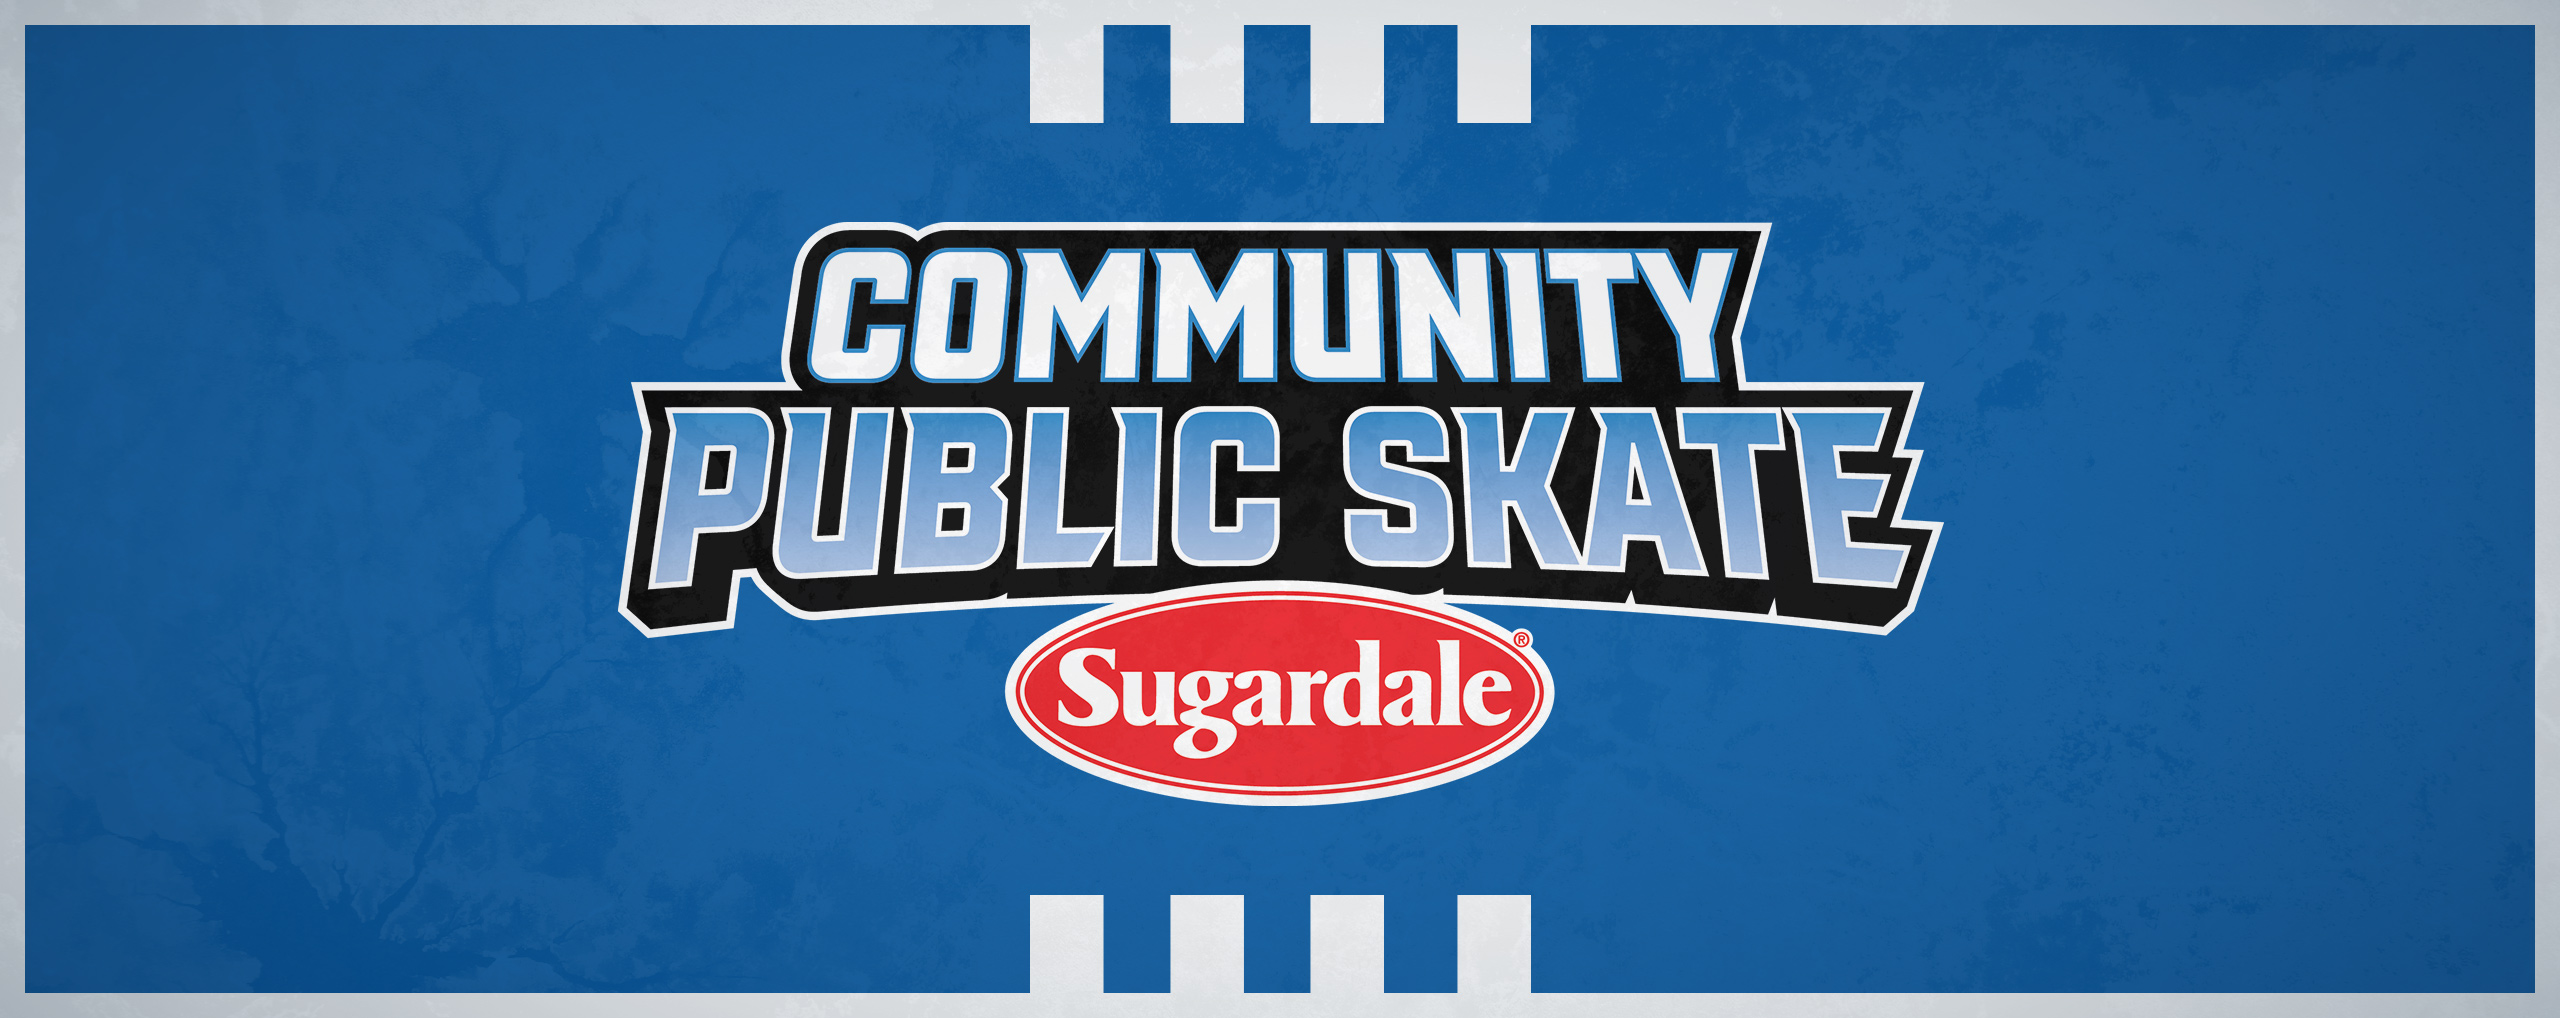 Community Public Skate